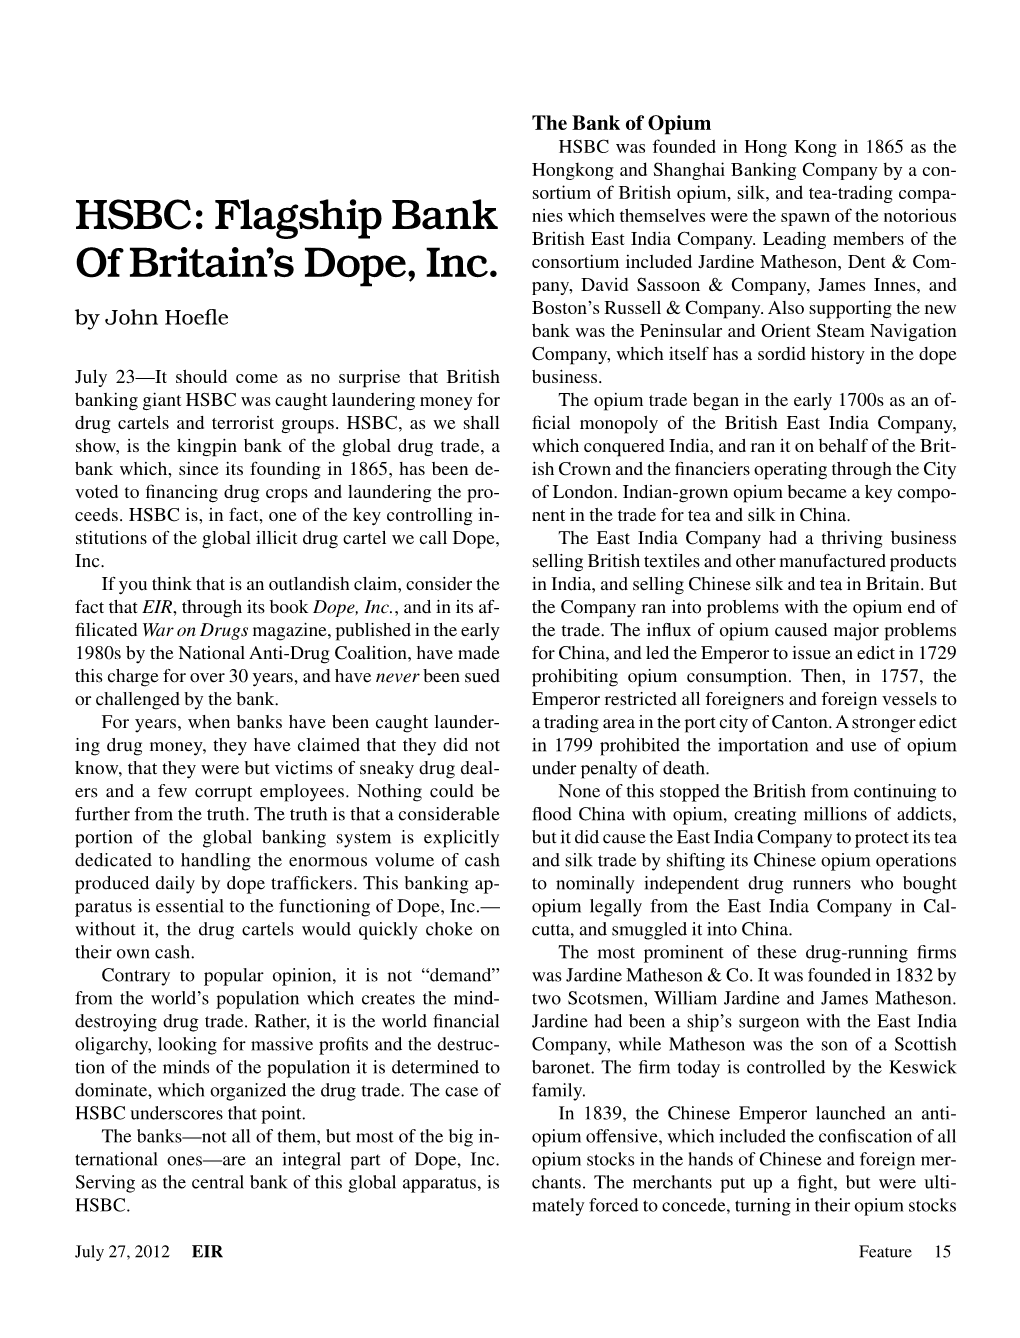 HSBC: Flagship Bank of Britain's Dope, Inc